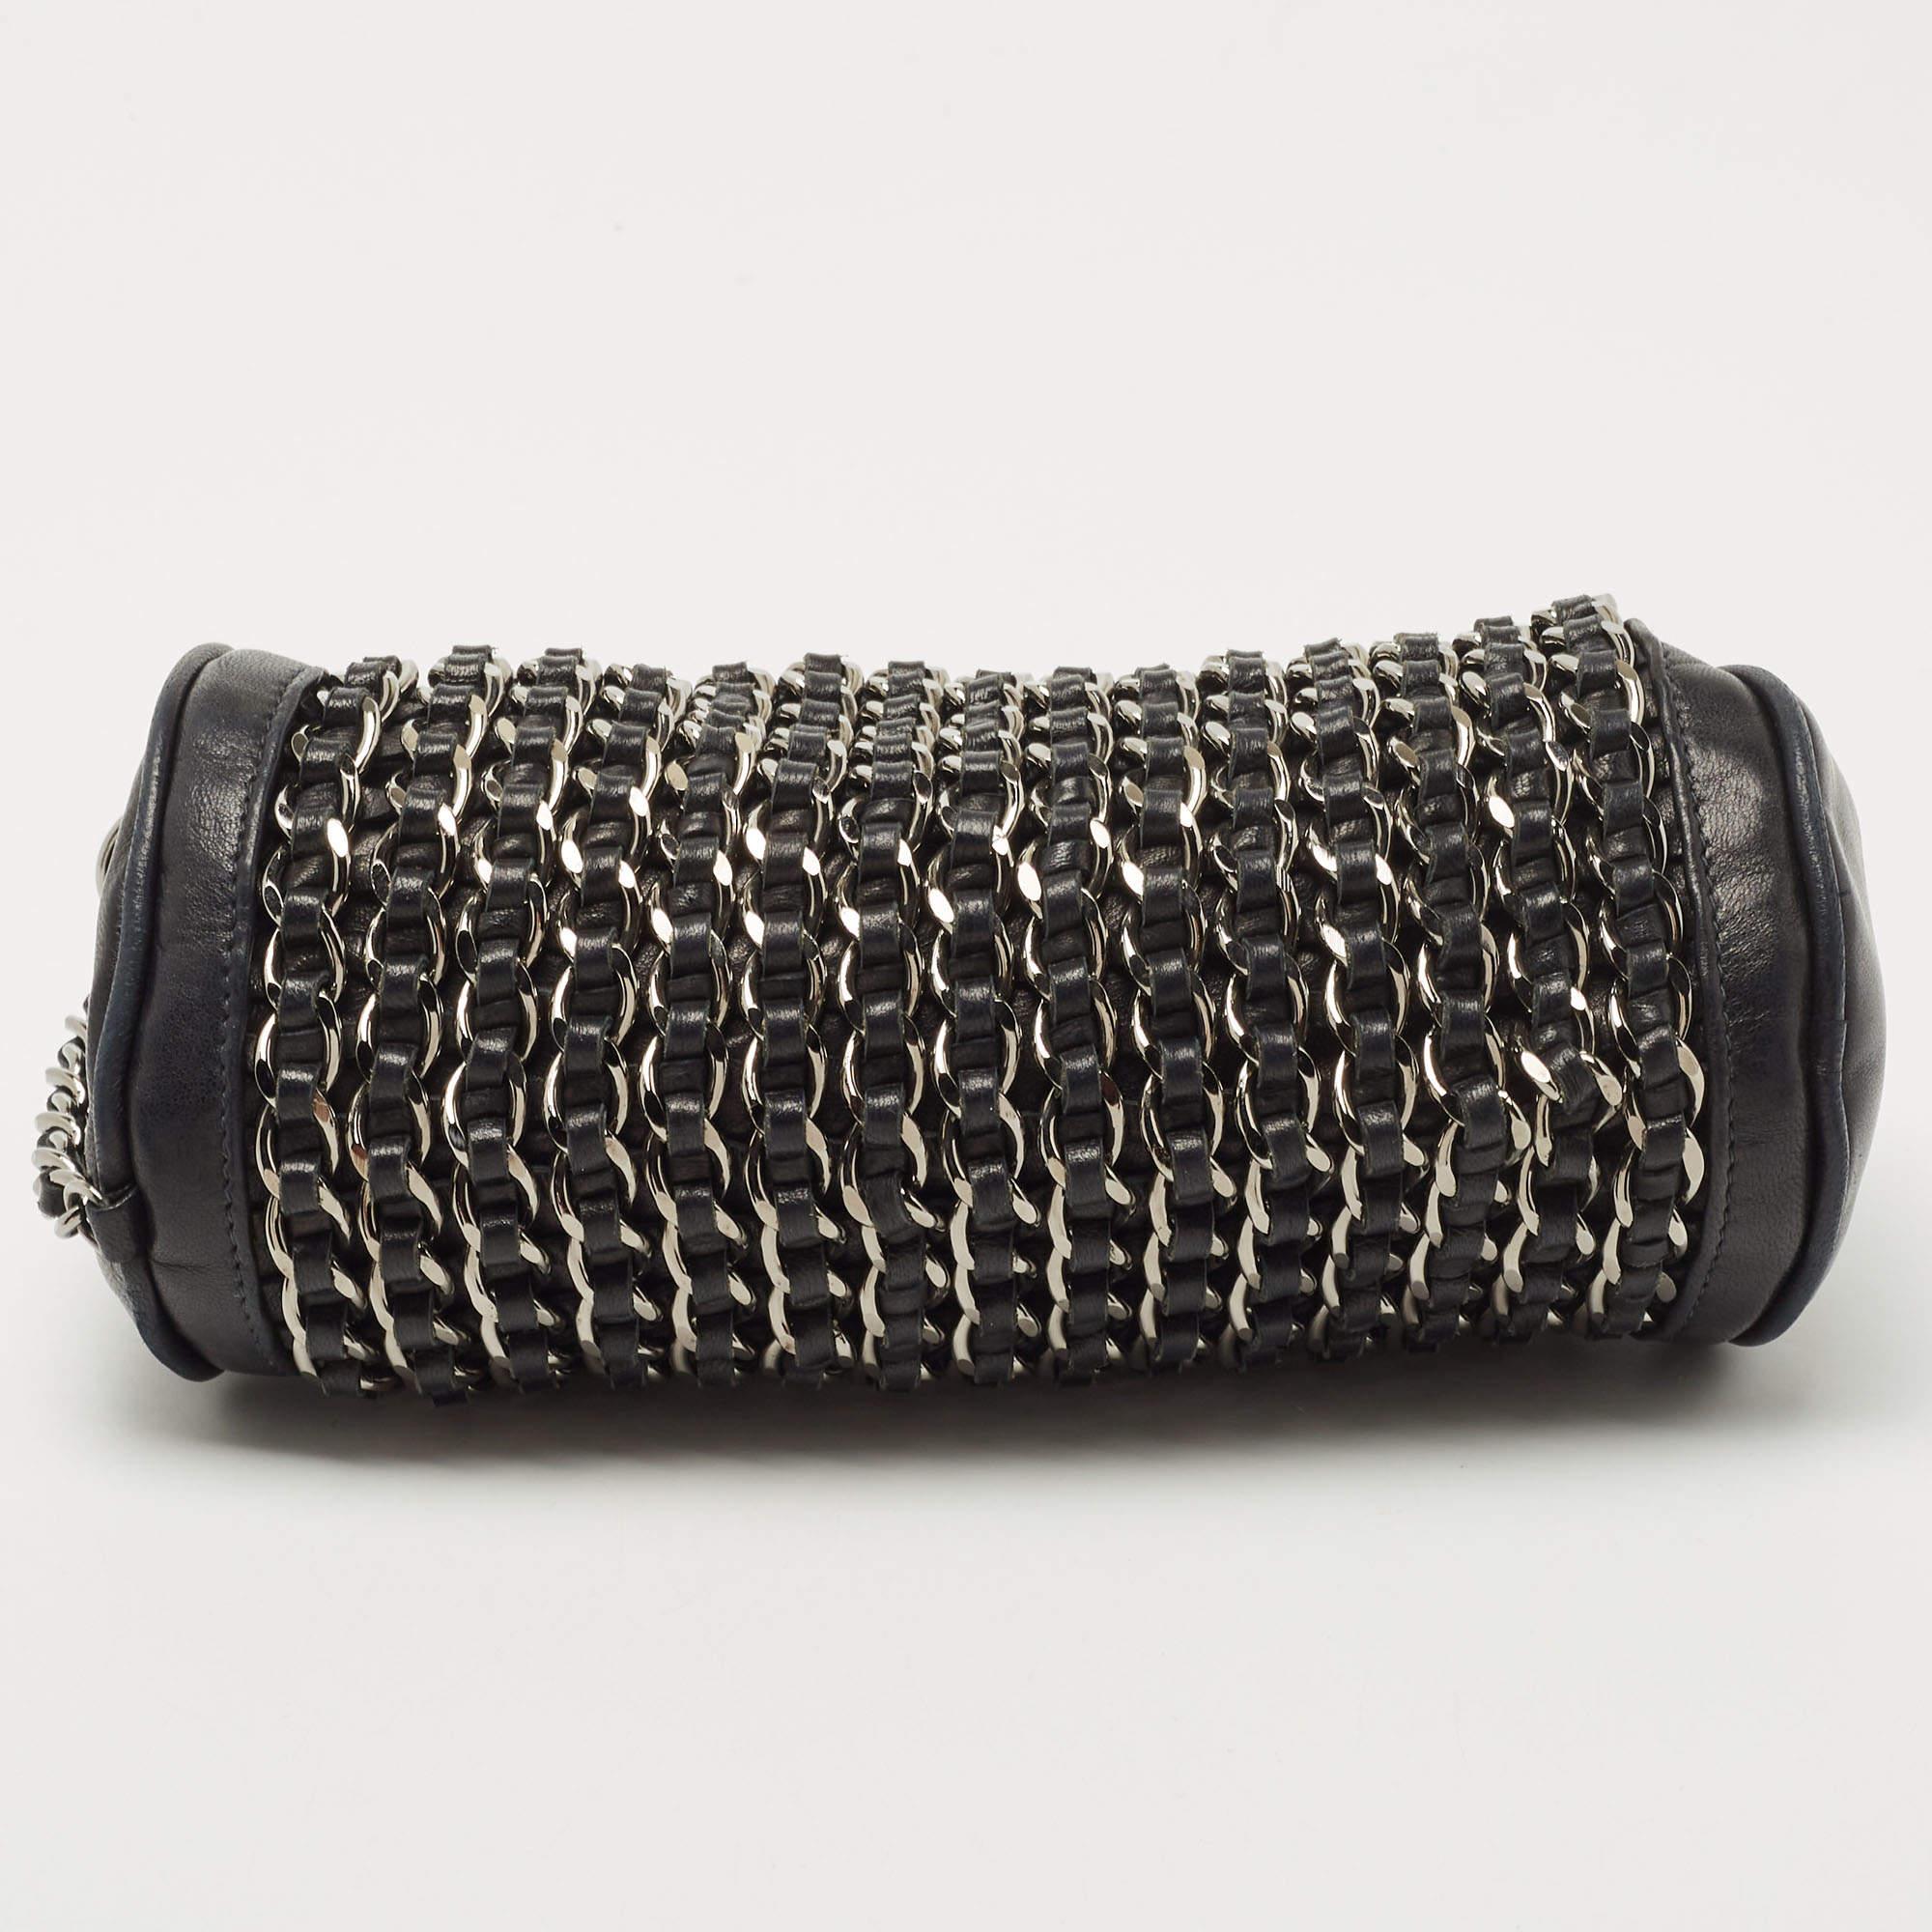 Chanel Black Leather Chain Links Barrel Clutch Bag 1